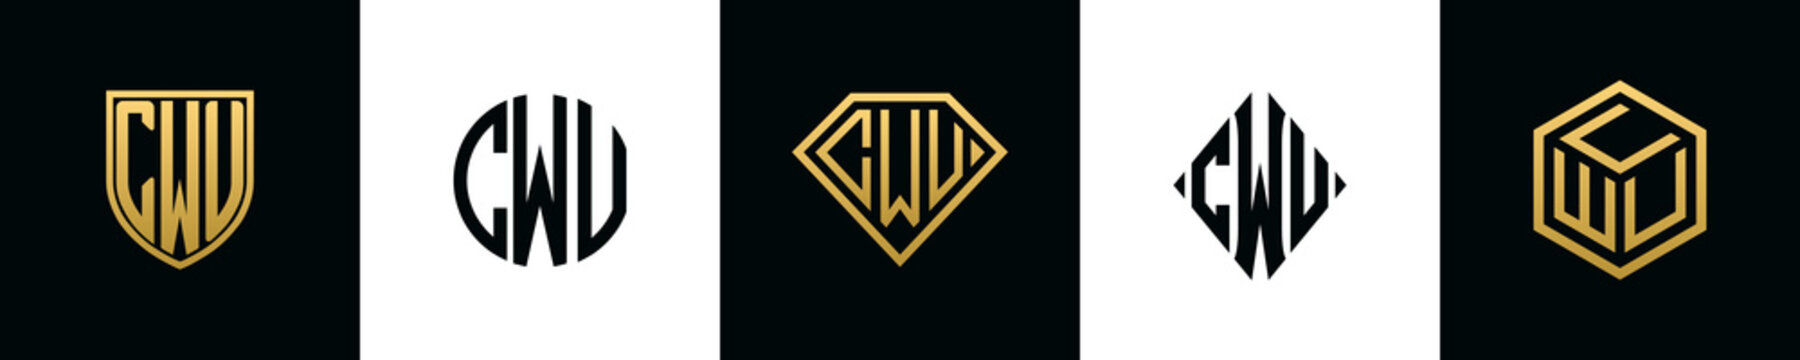 Initial letters CWU logo designs Bundle